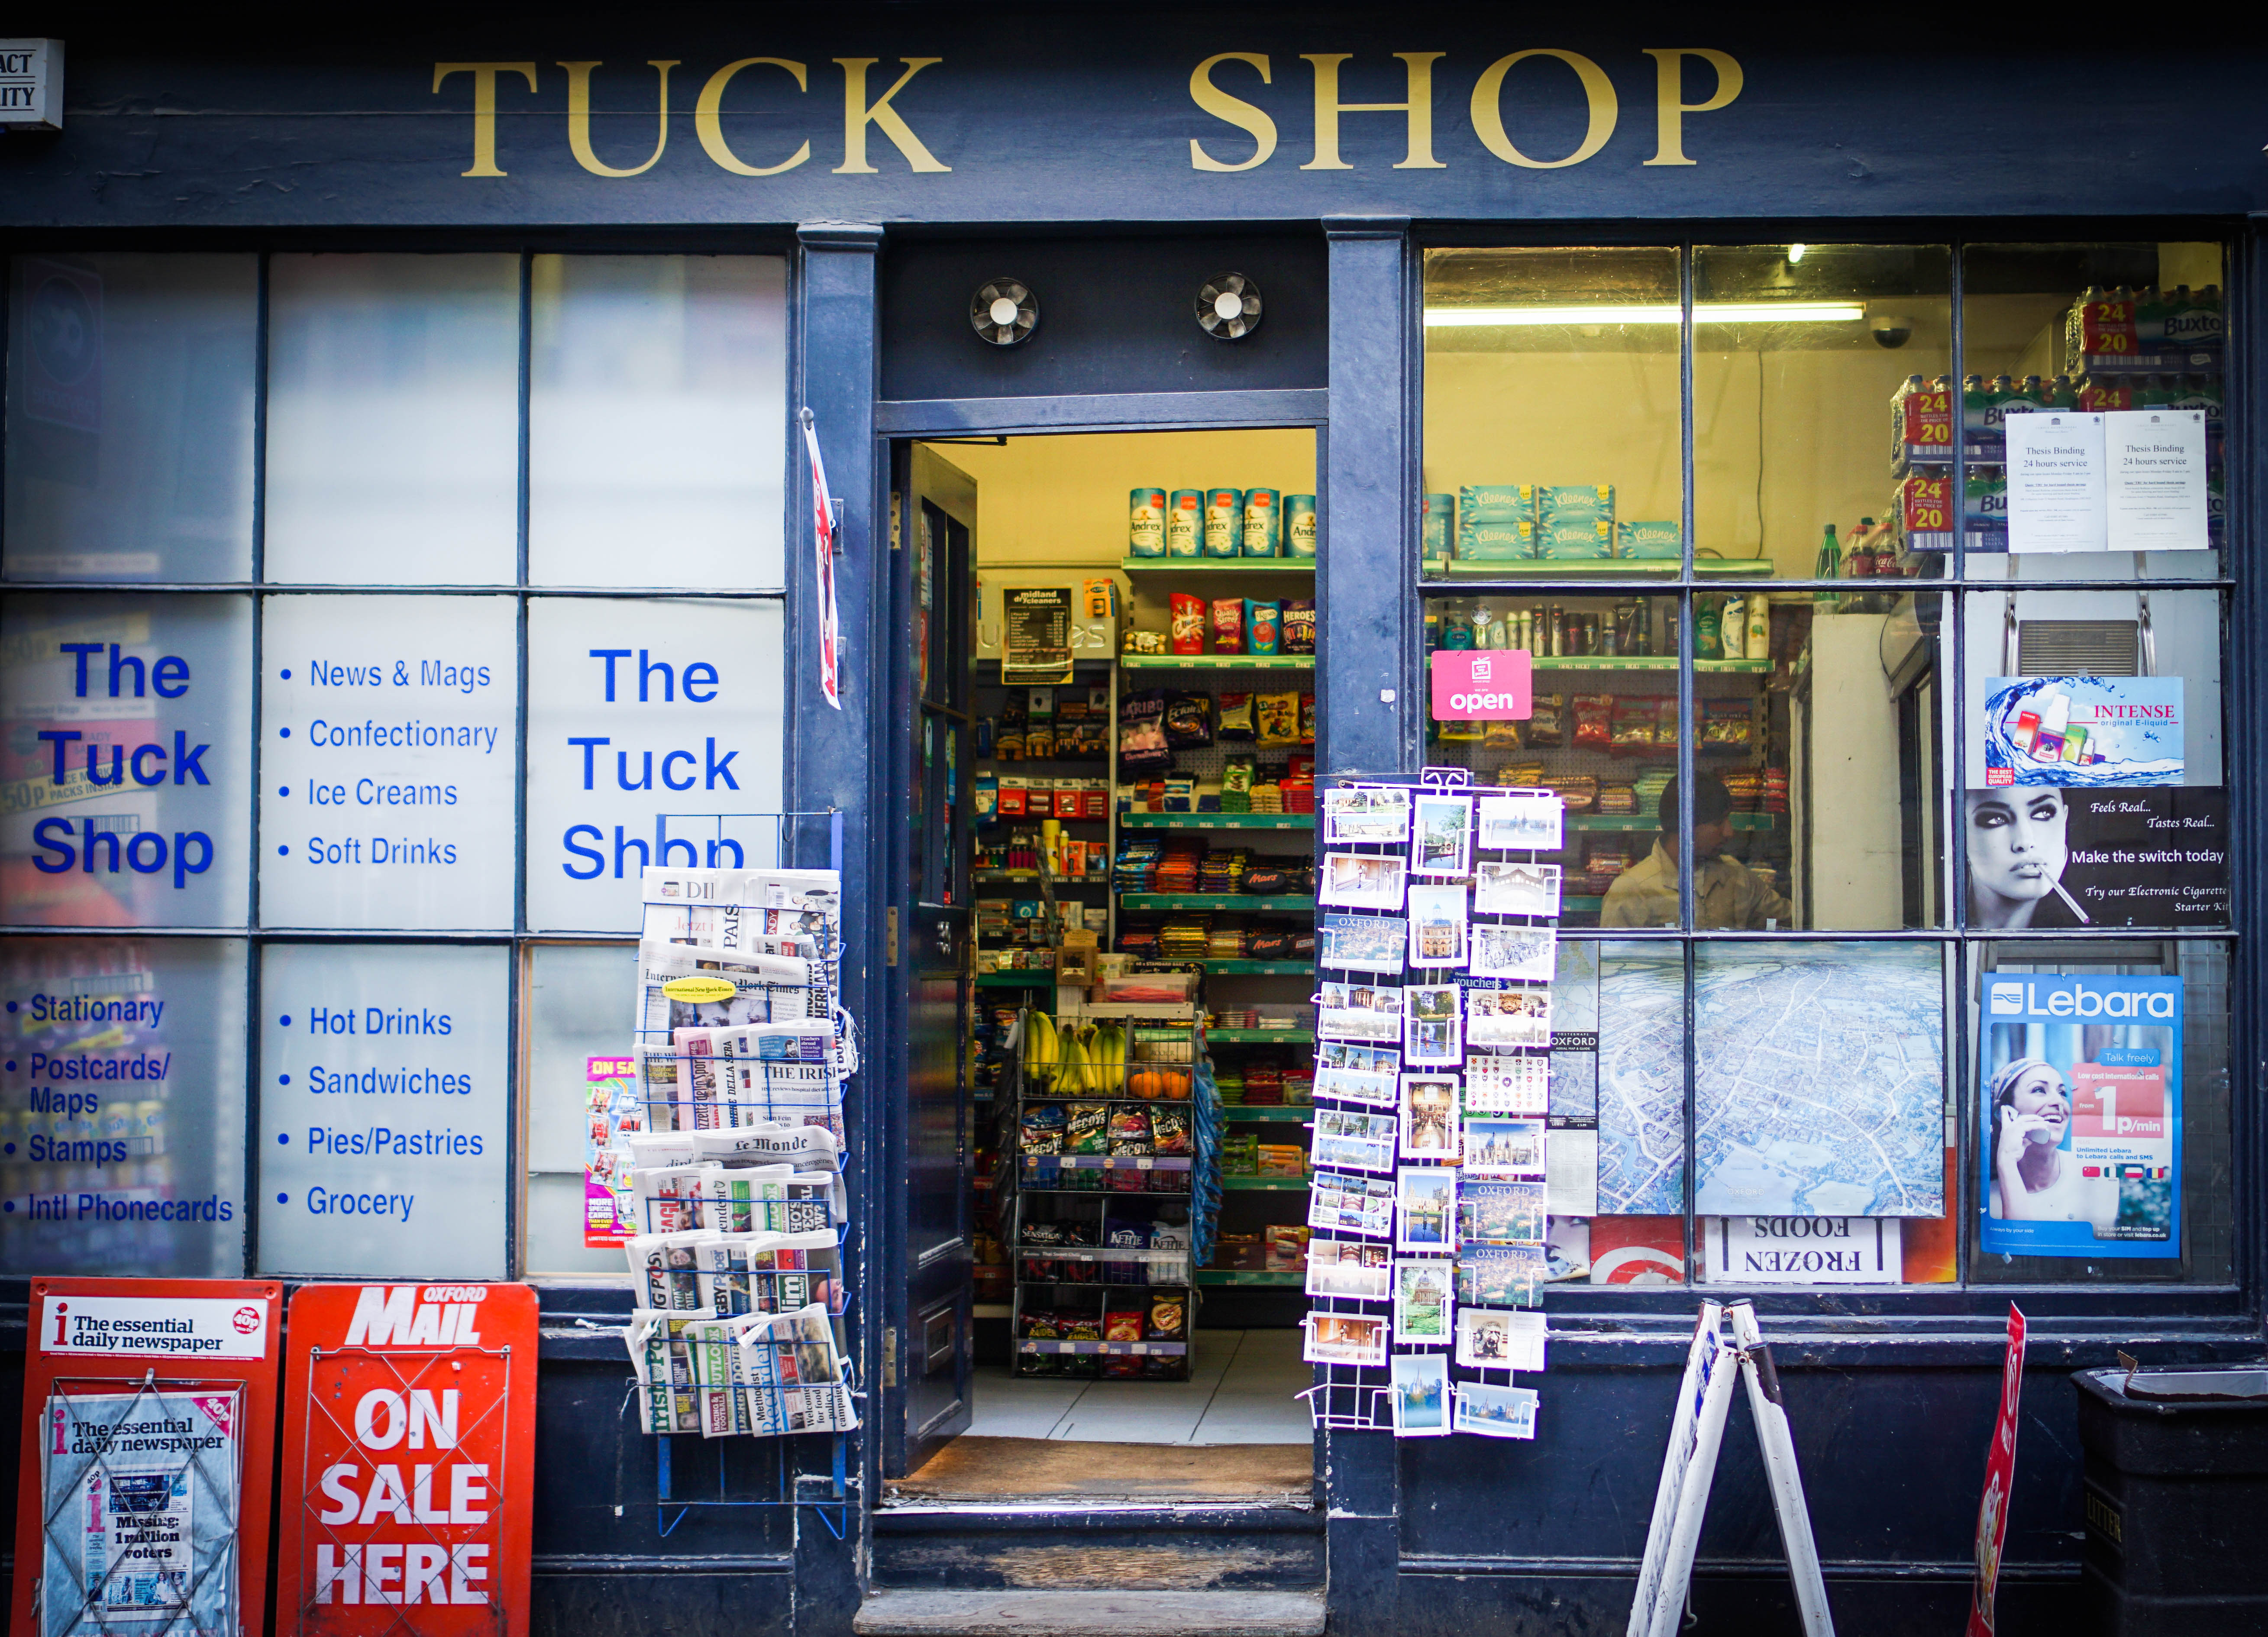 Tuck shop - Wikipedia